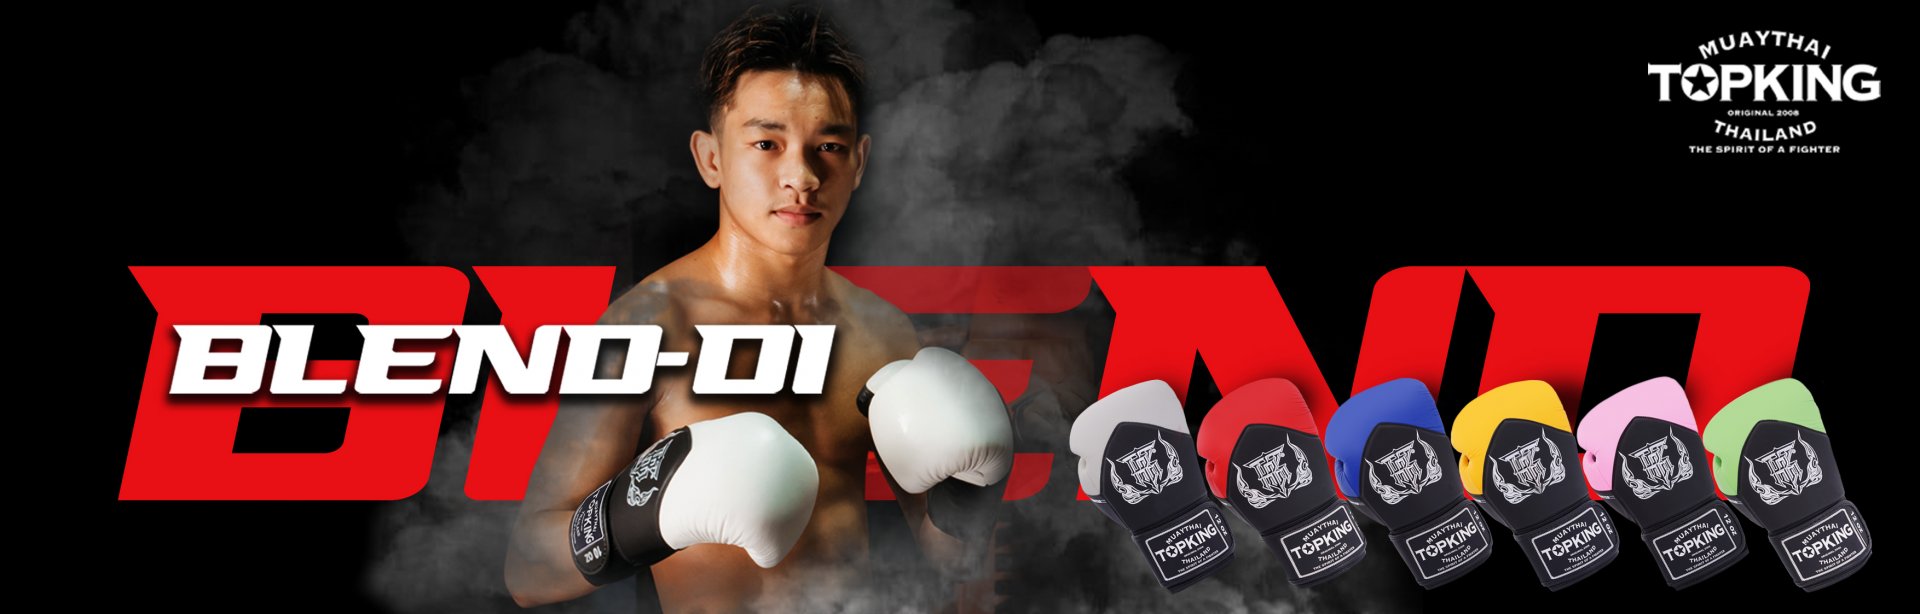 Top King Boxing - Muay Thai Training and equipment : topkingboxing.com